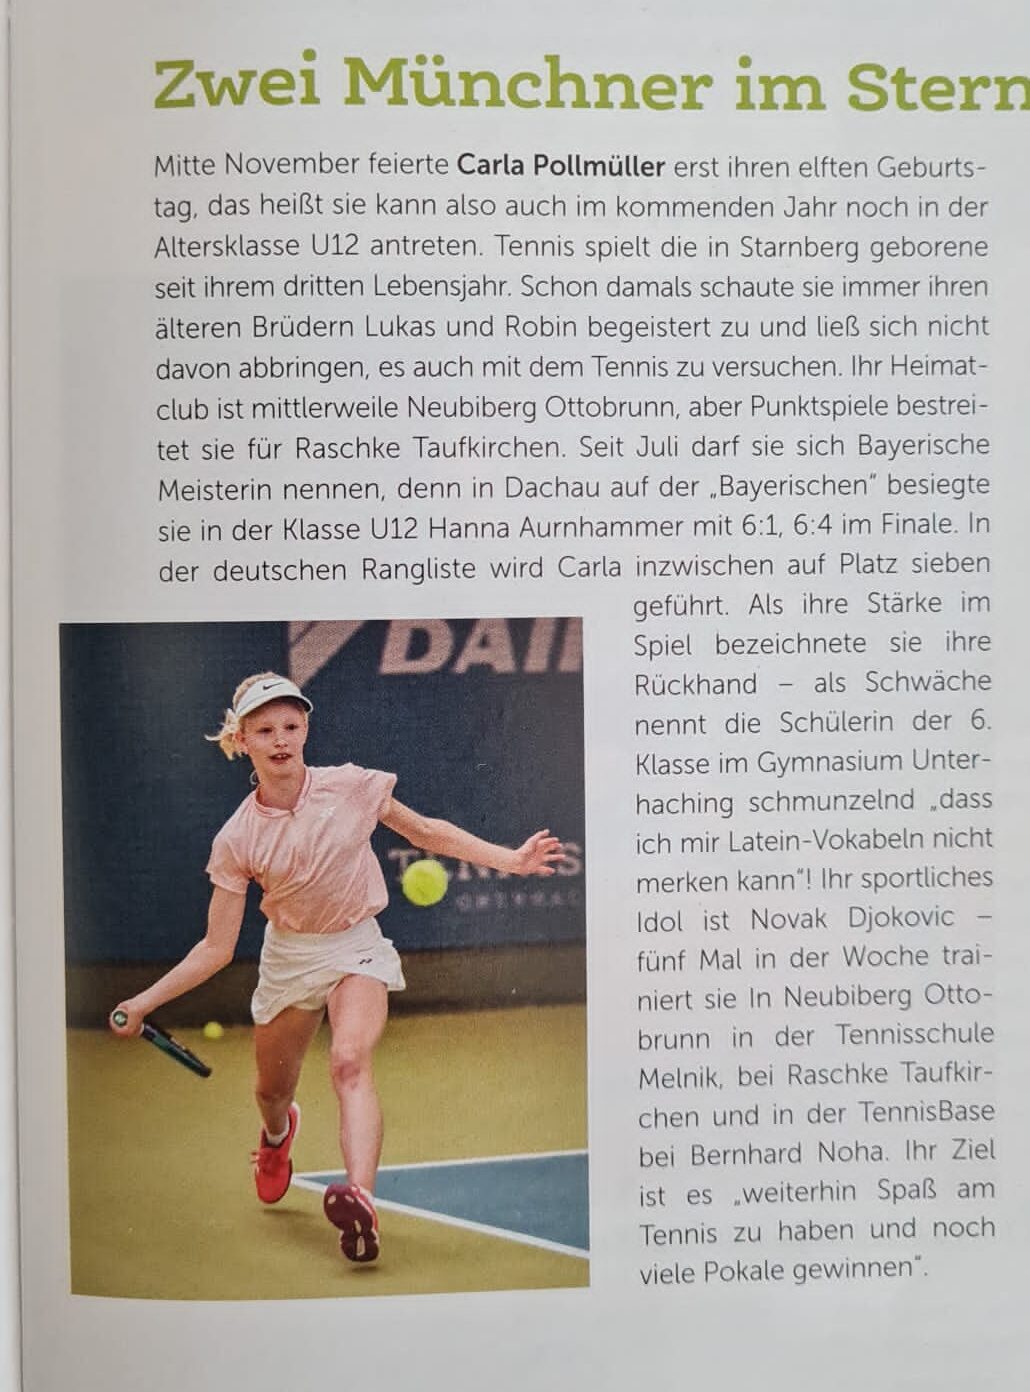 Carla Pollmüller in "Bayern Tennis"